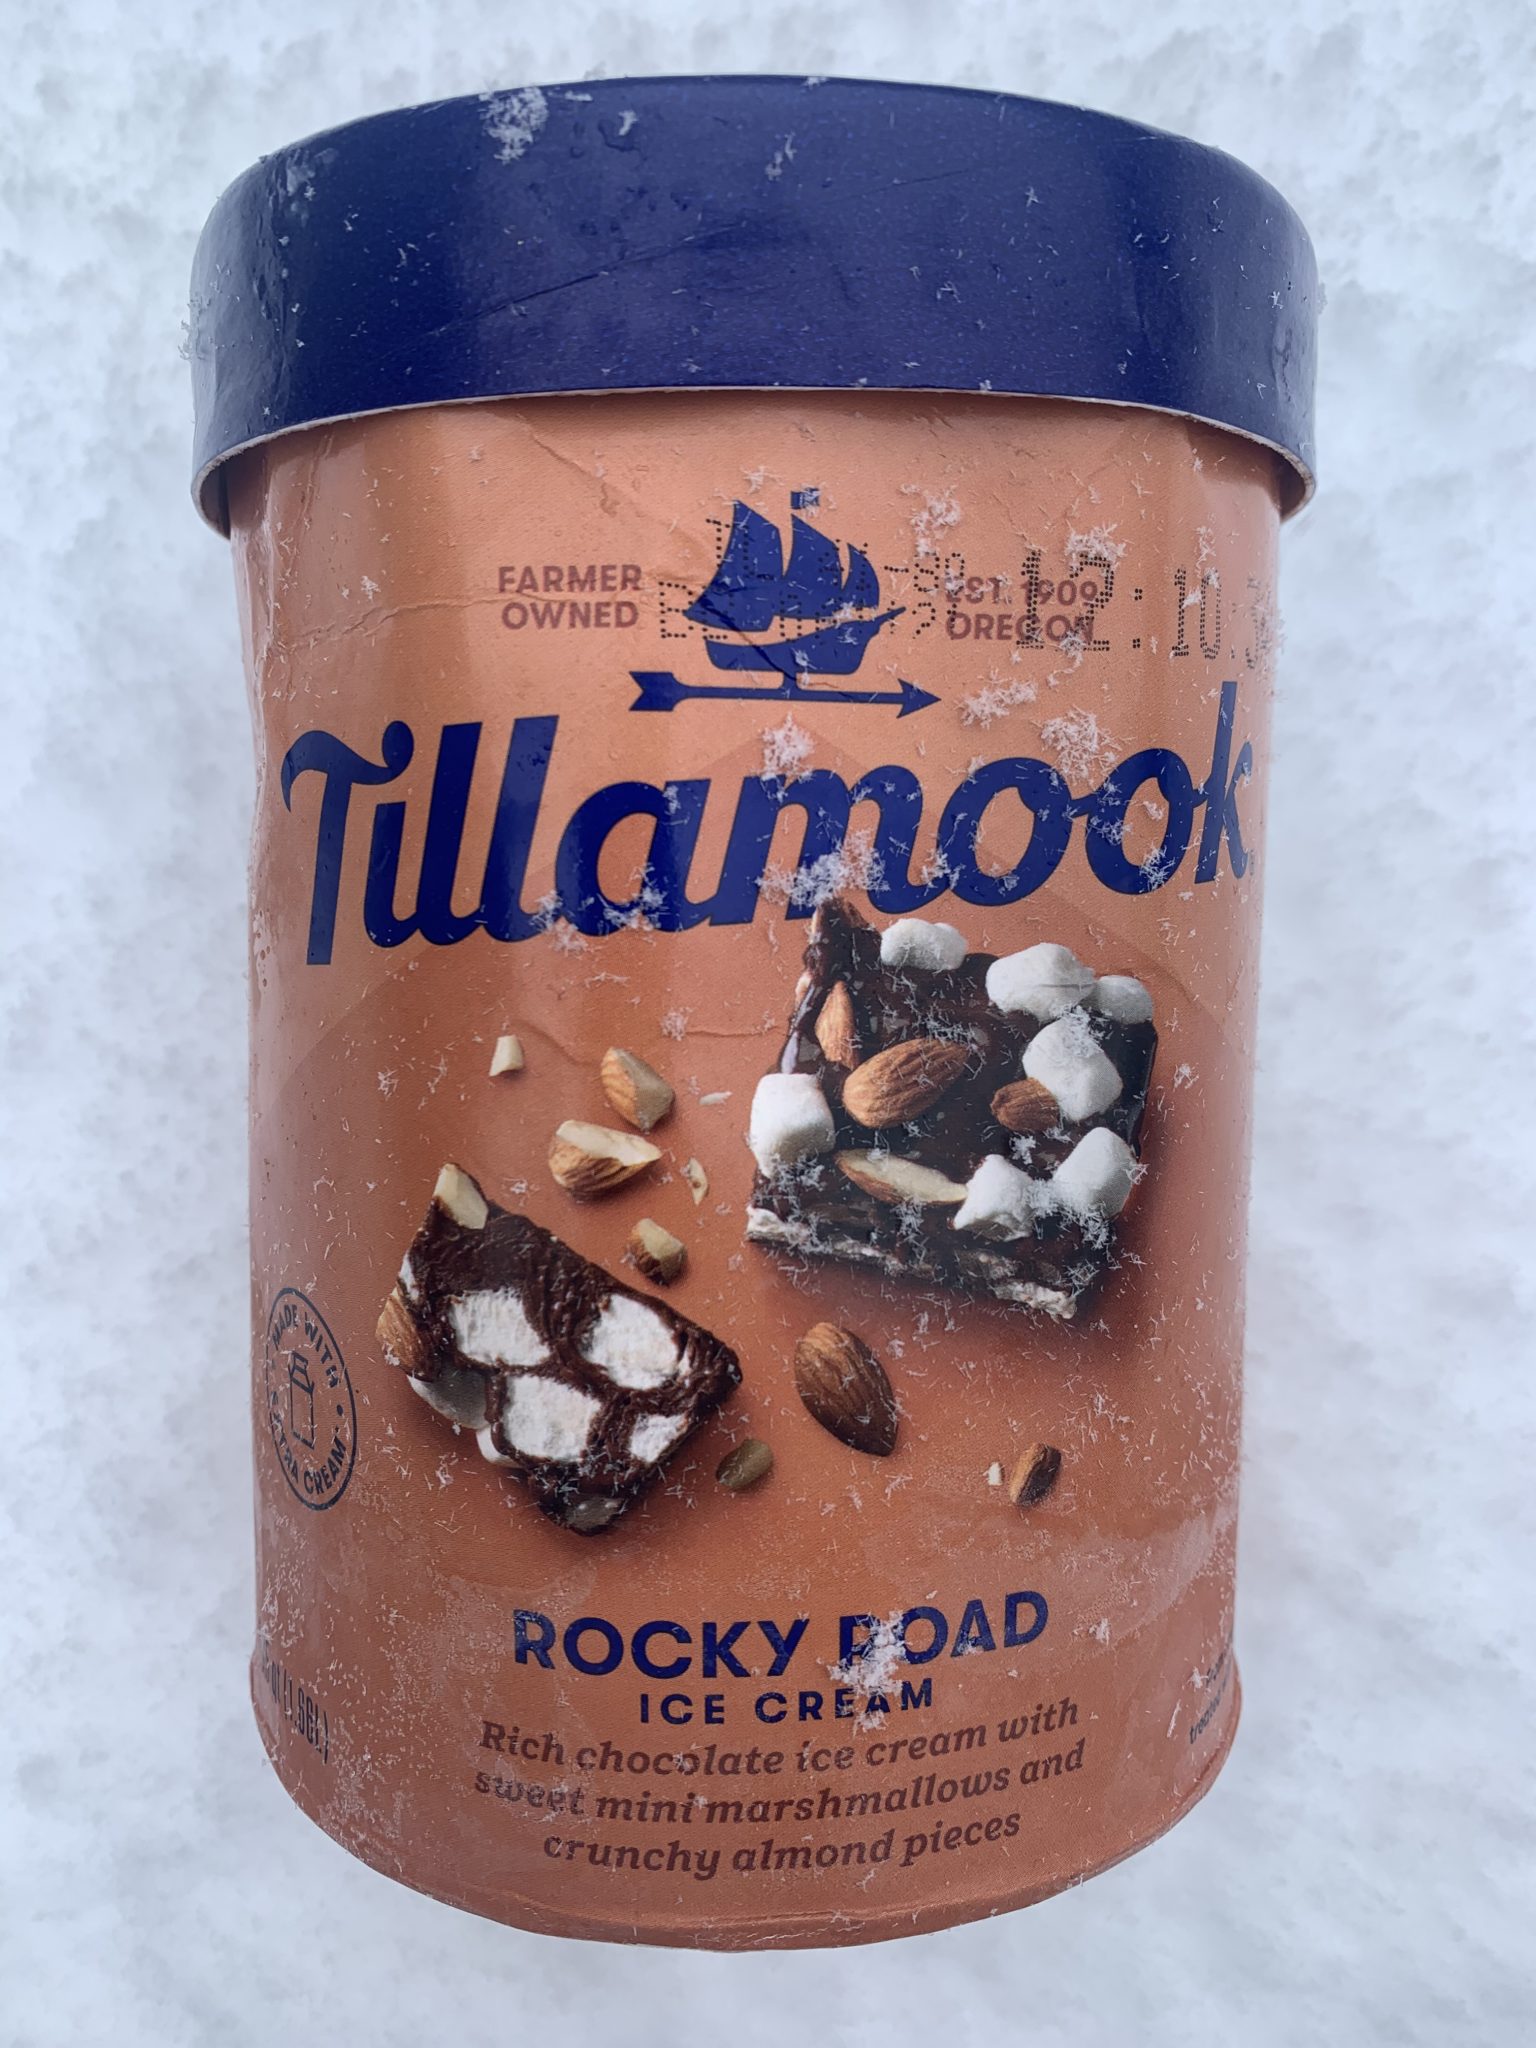 Tillamook Rocky Road Ice Cream Taste Test The Off Brand Guy